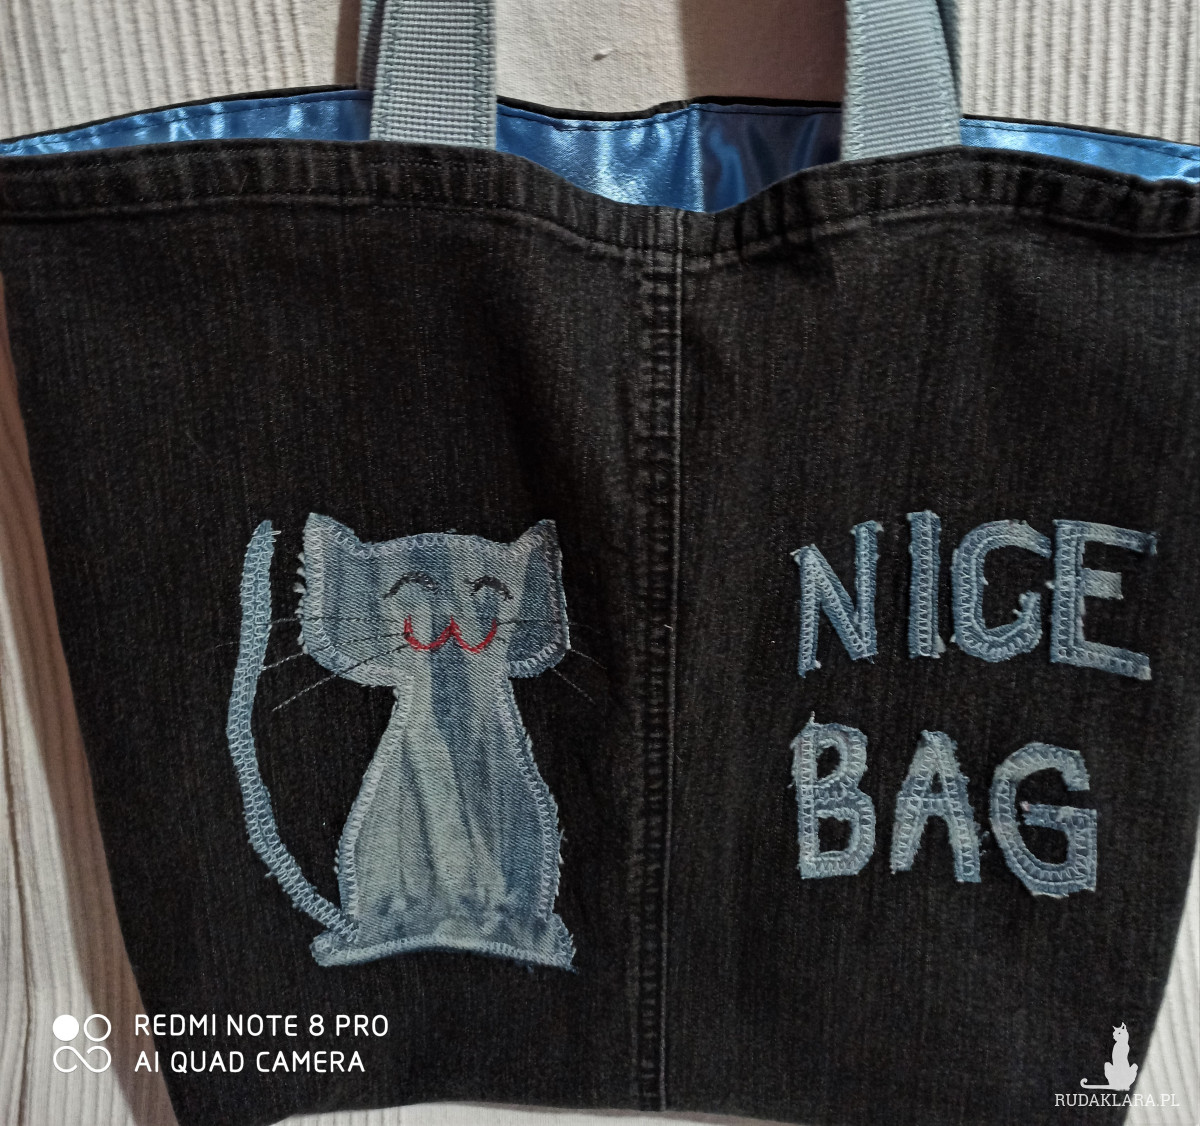 Jeansowa shopperka "nice bag"